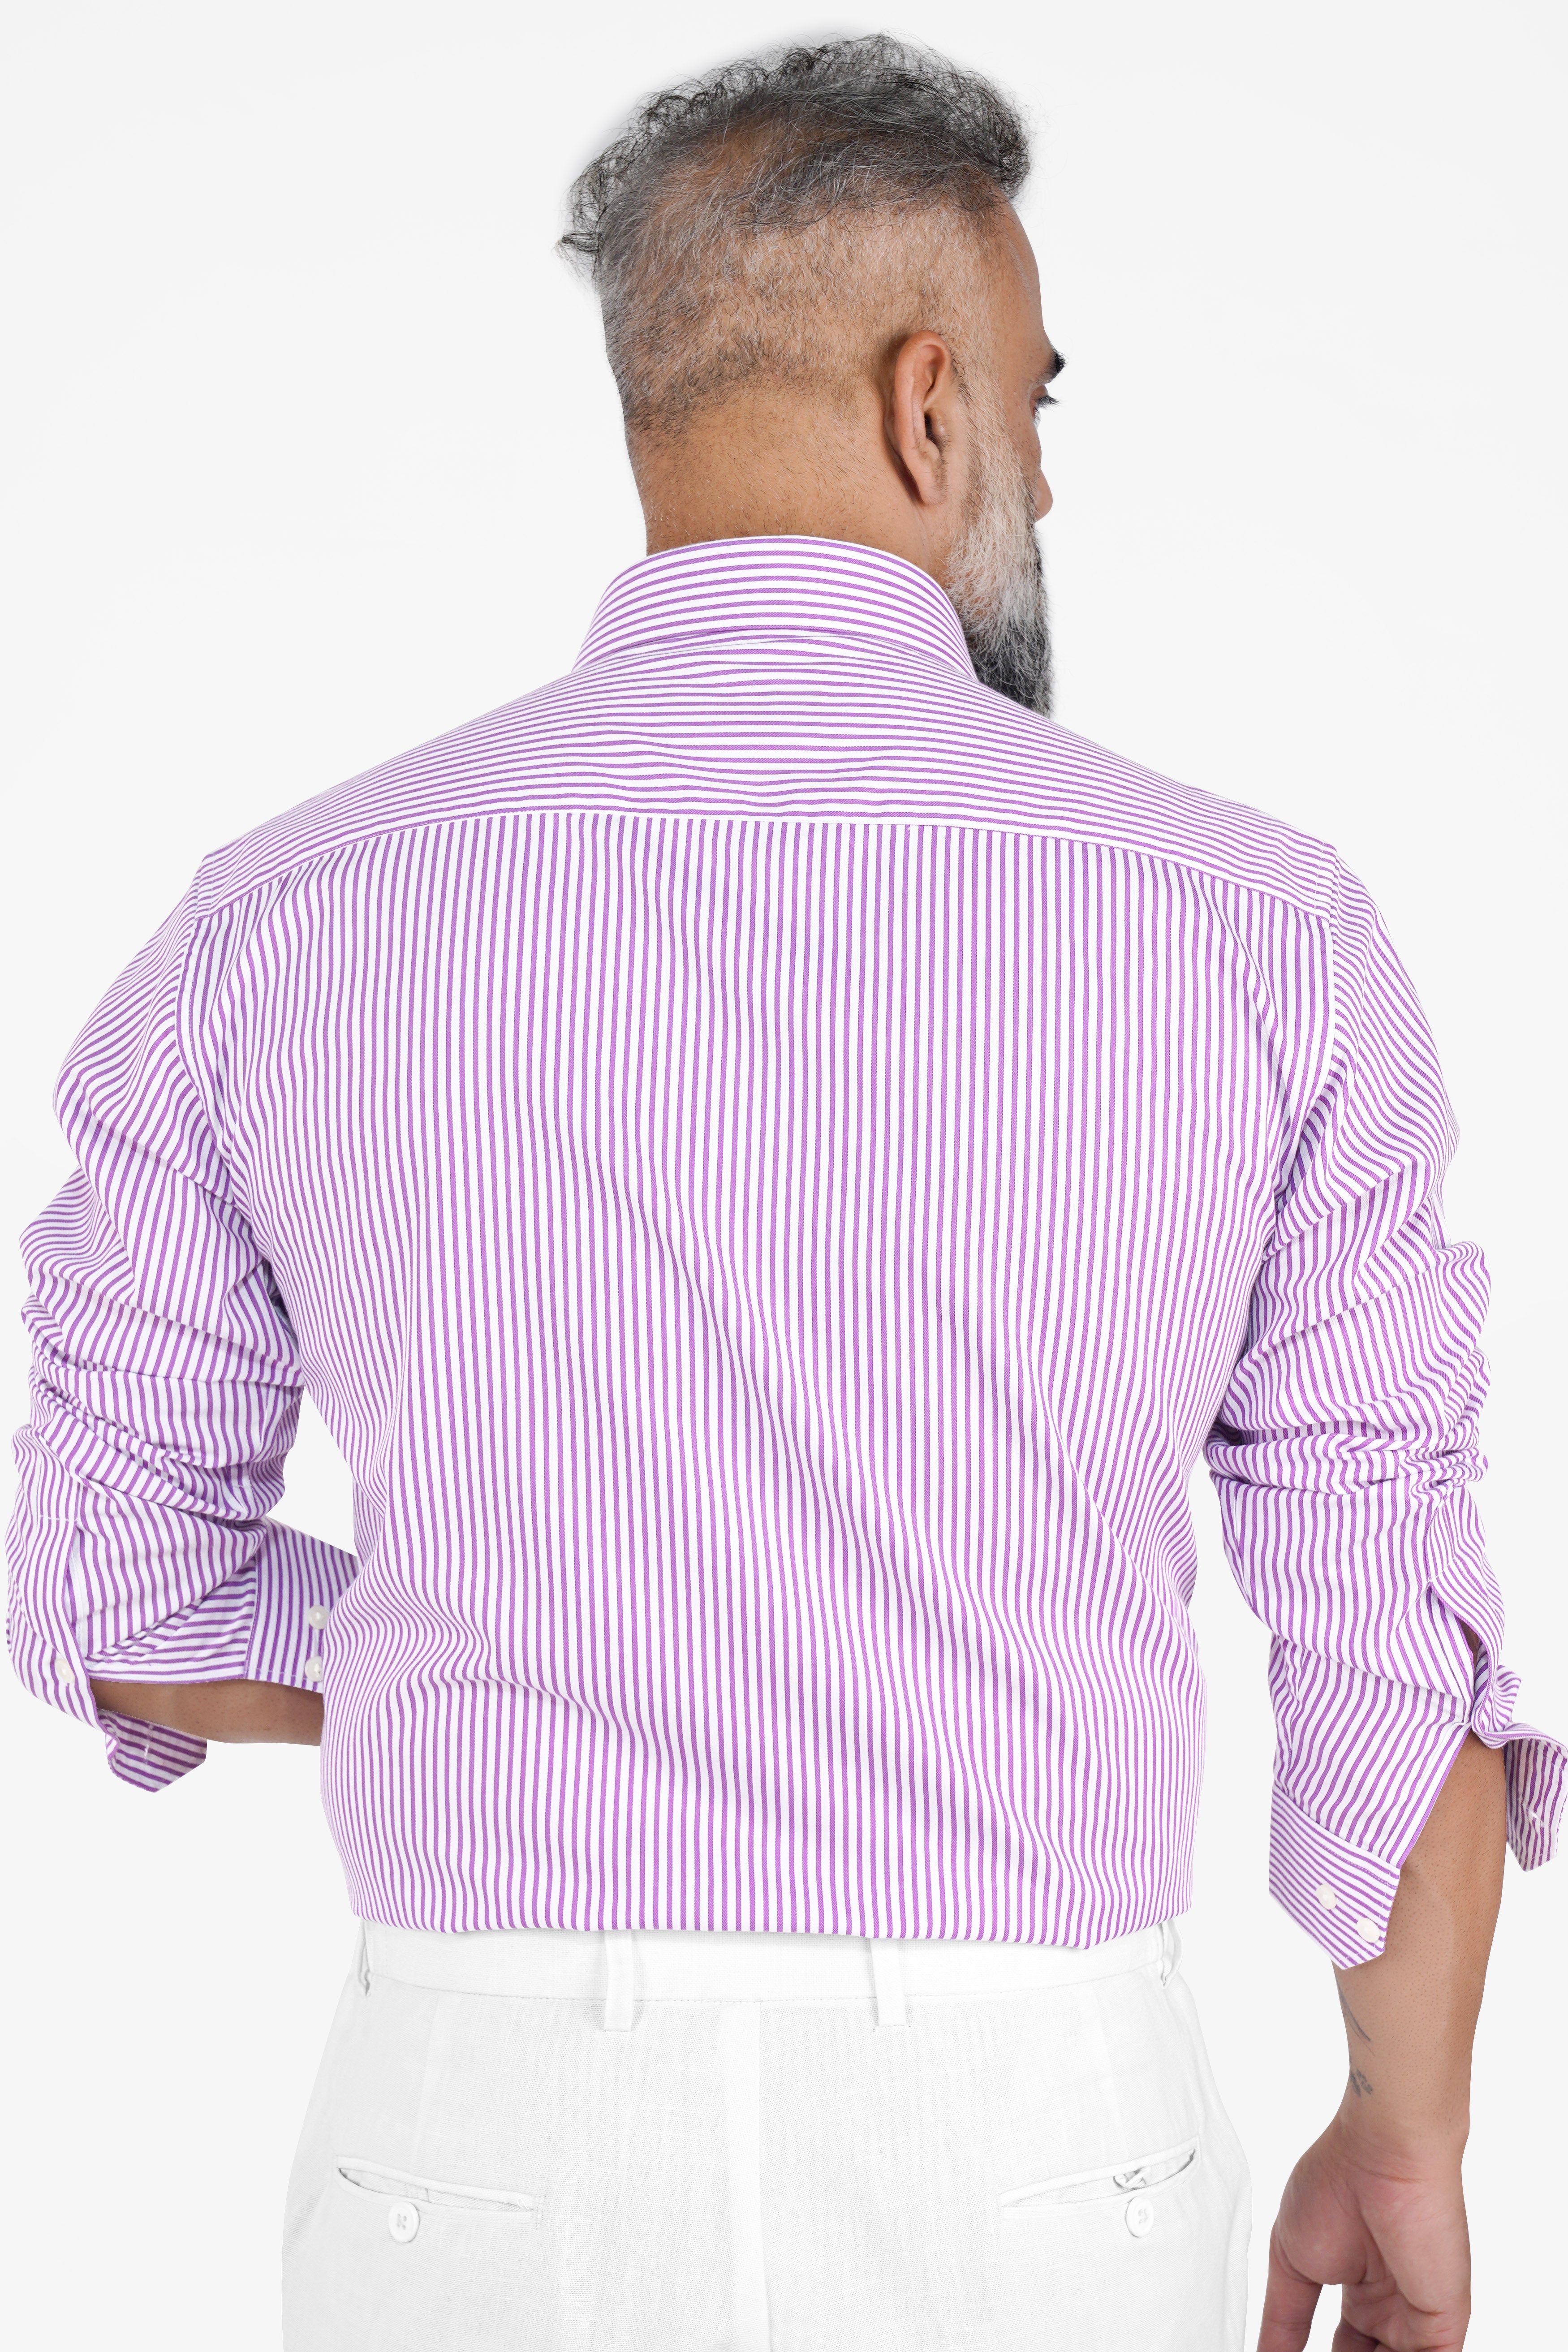 Bright White with Pastel Violet Striped Premium Cotton Shirt